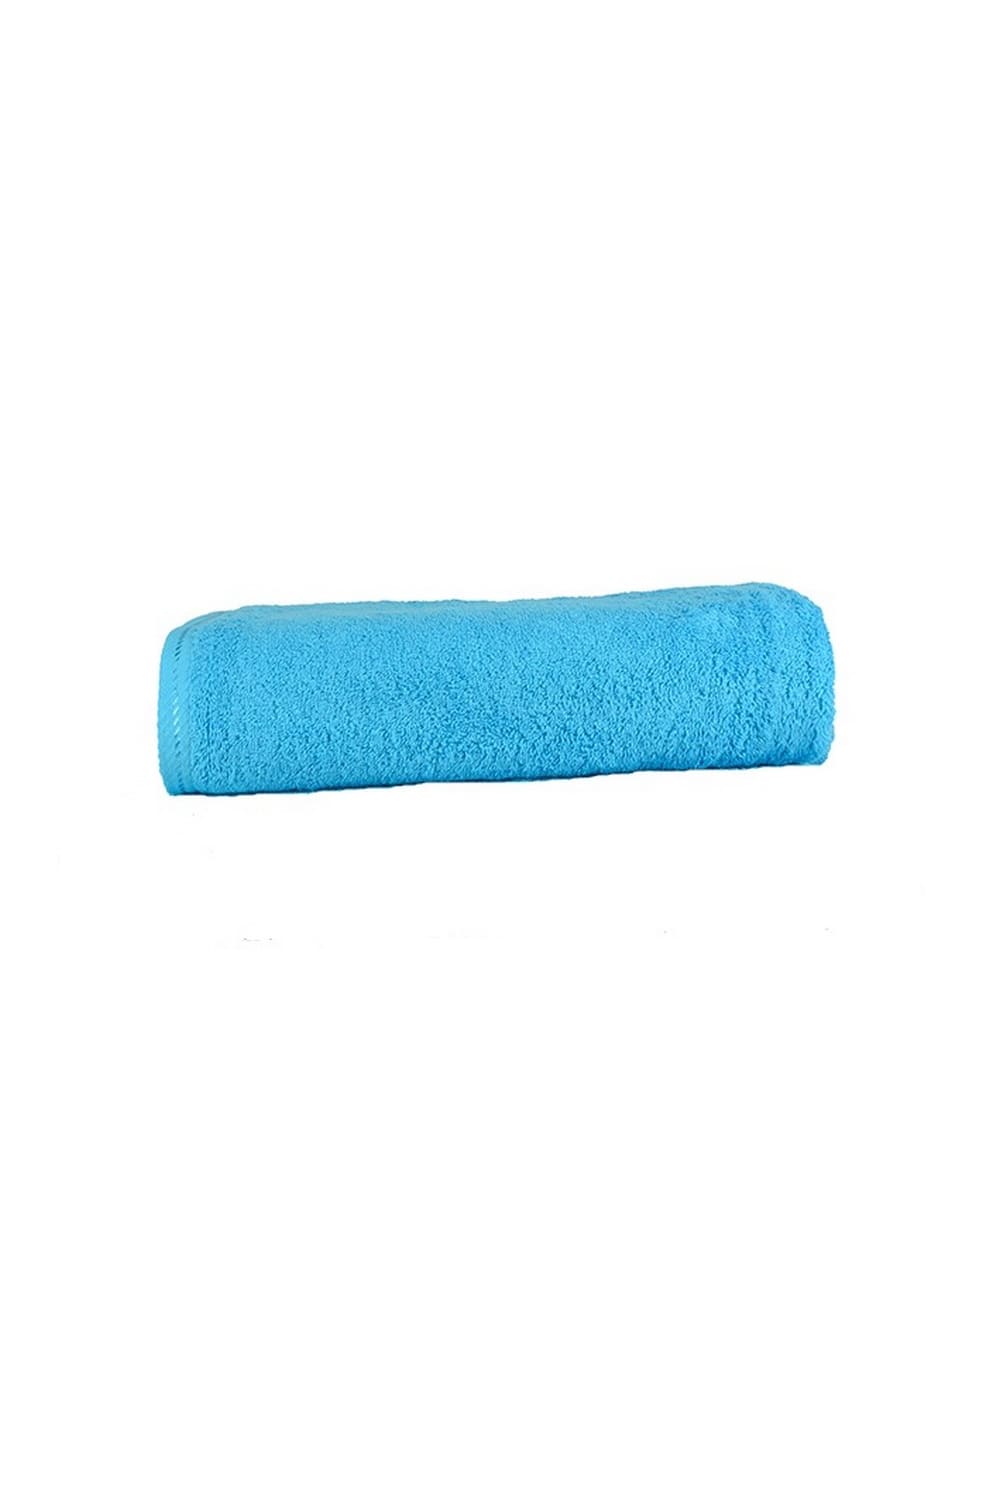 A&R Towels Ultra Soft Bath towel (Aqua Blue) (One Size)